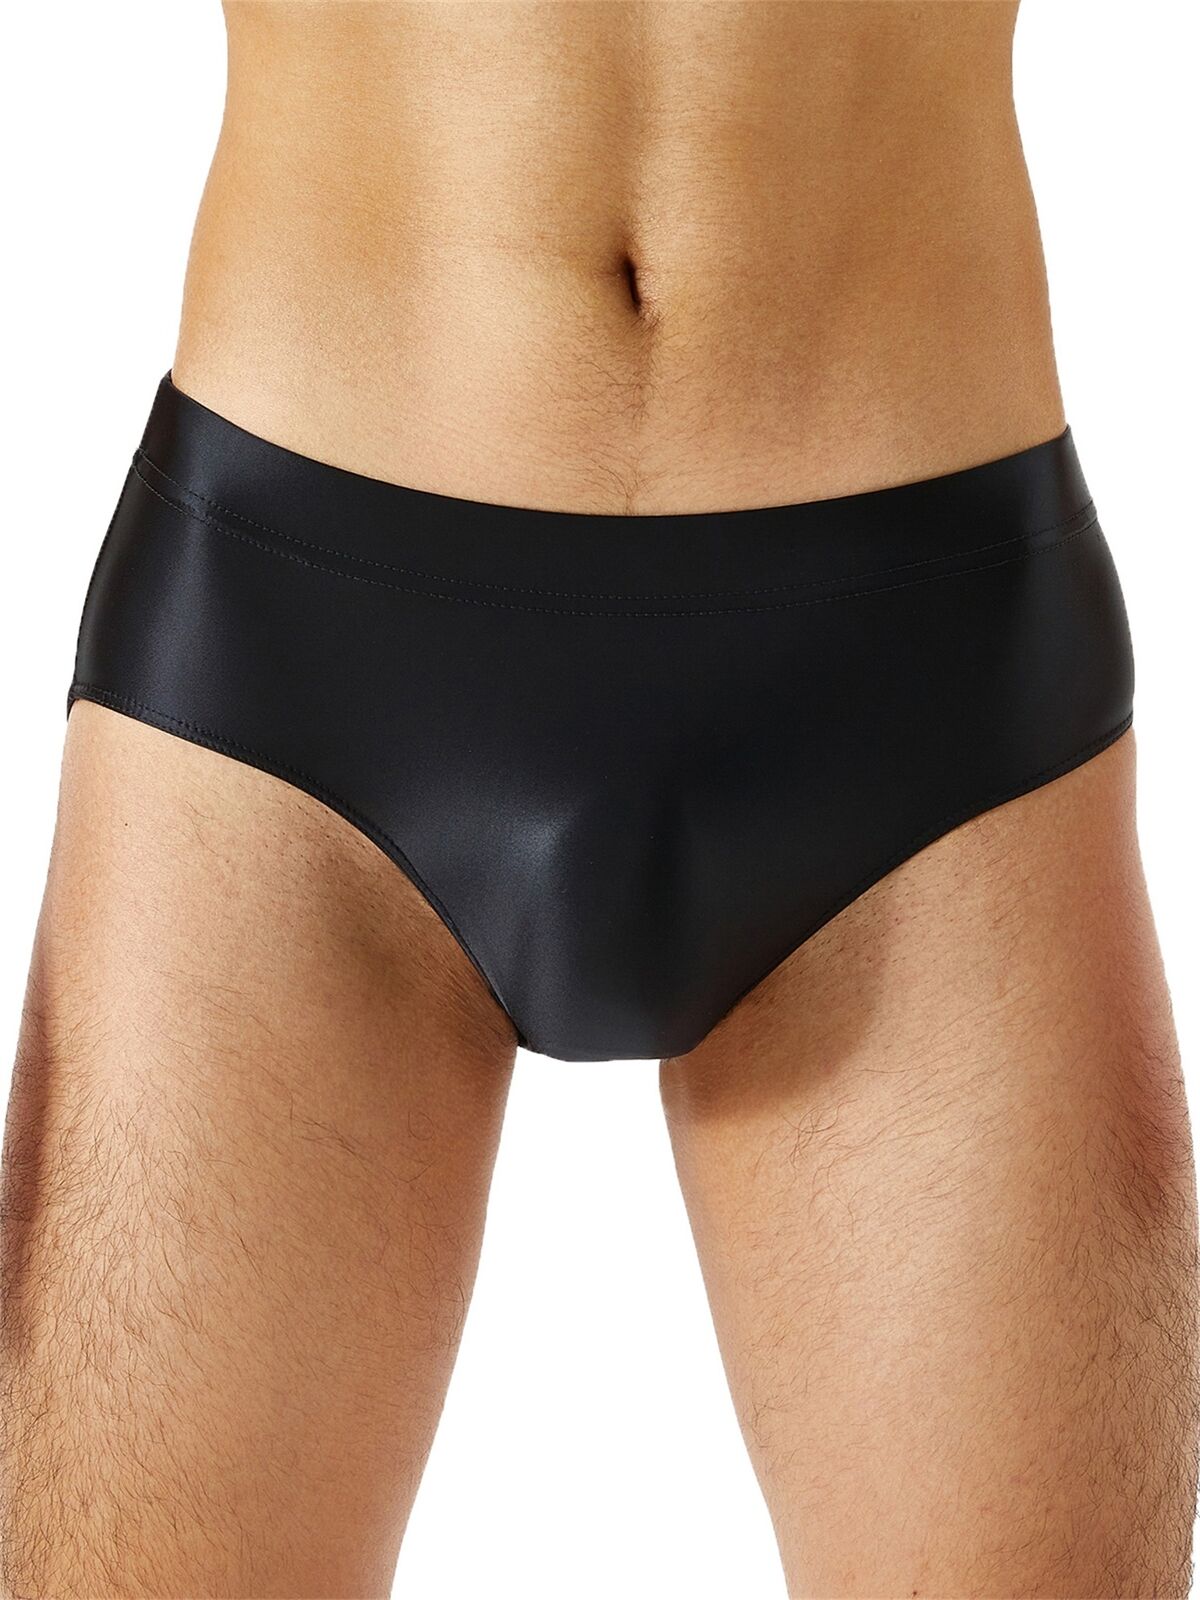 US Men\'s Glossy Oily Briefs Sexy Seamless Silky Bikini Underwear Sissy Panties